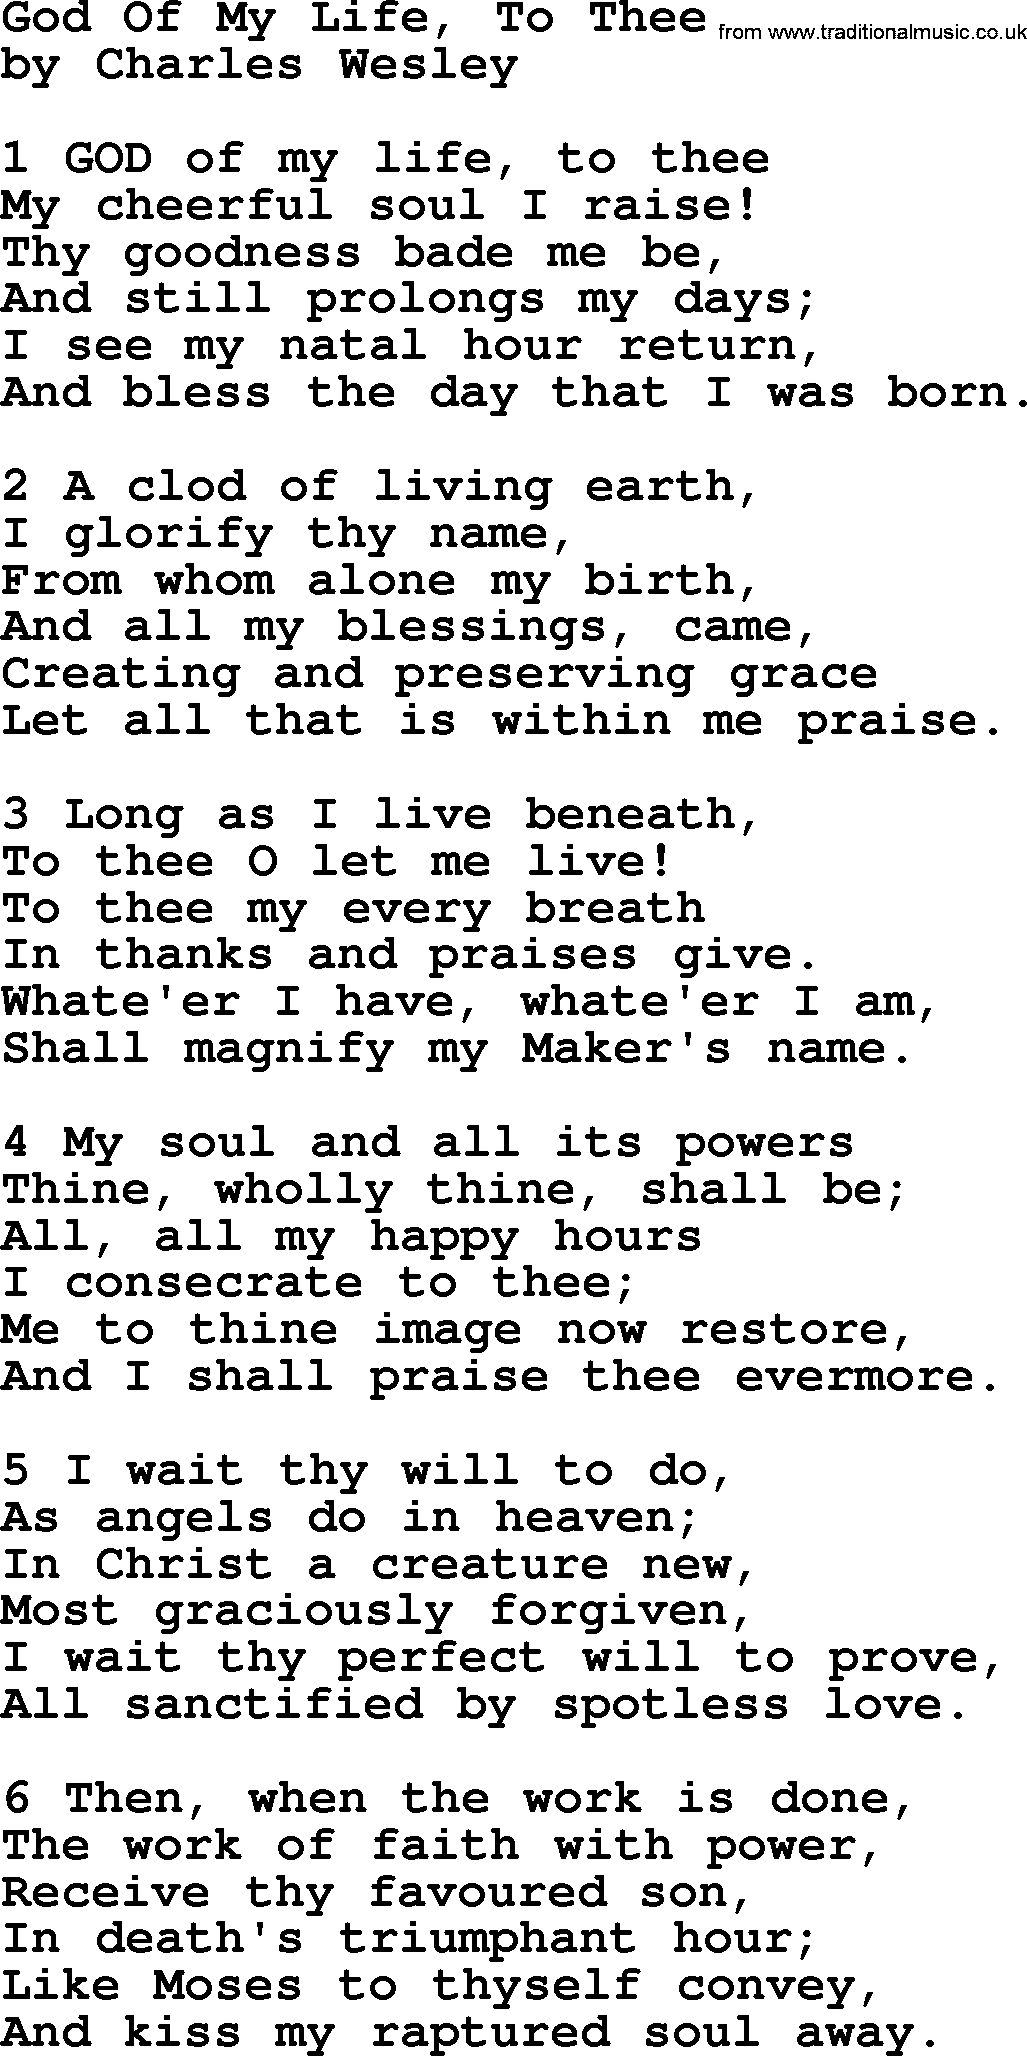 Charles Wesley hymn: God Of My Life, To Thee, lyrics